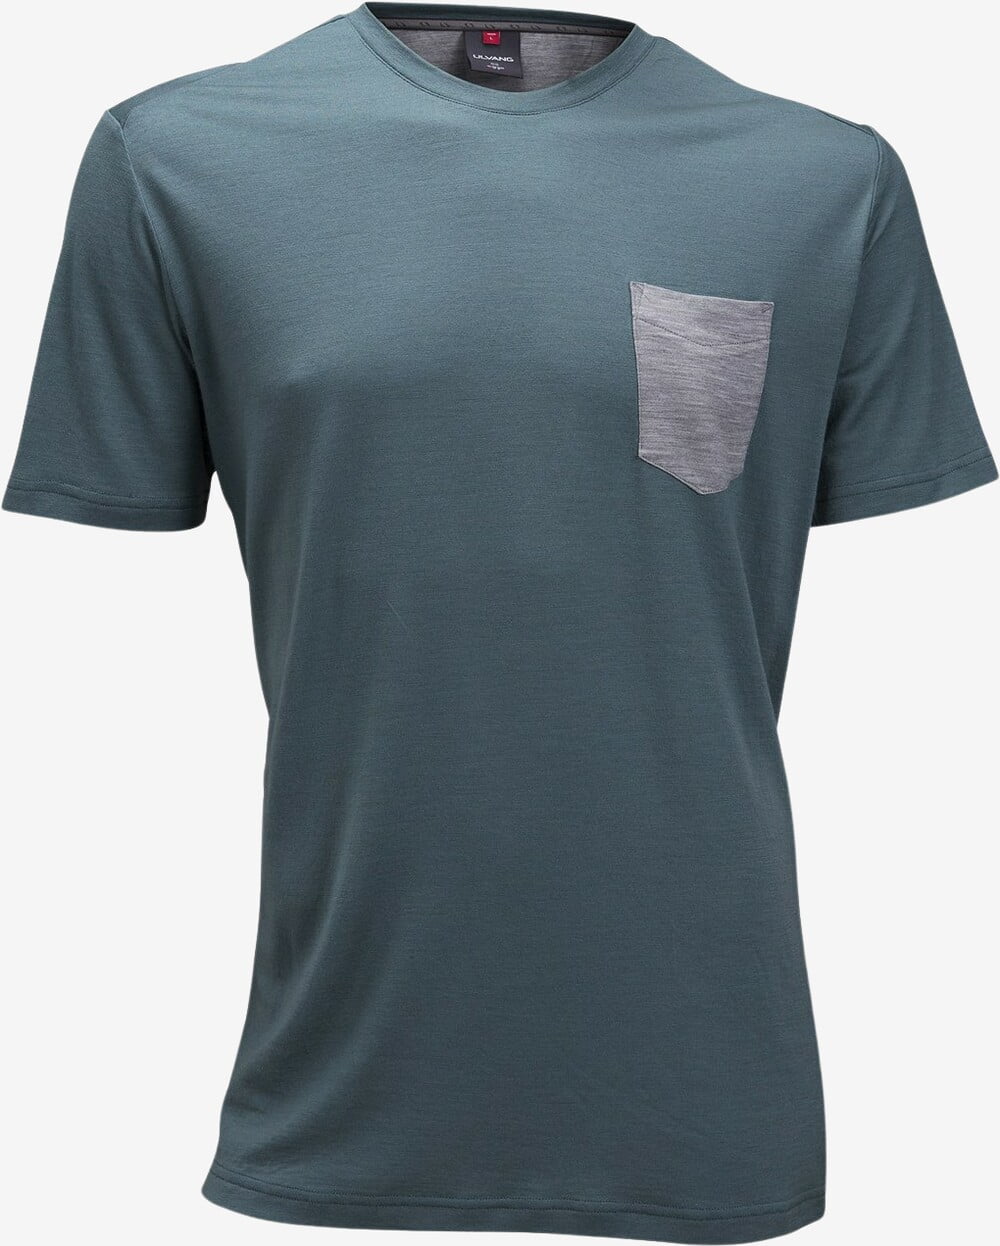 Ulvang - T-shirt i uld (Blå) - S